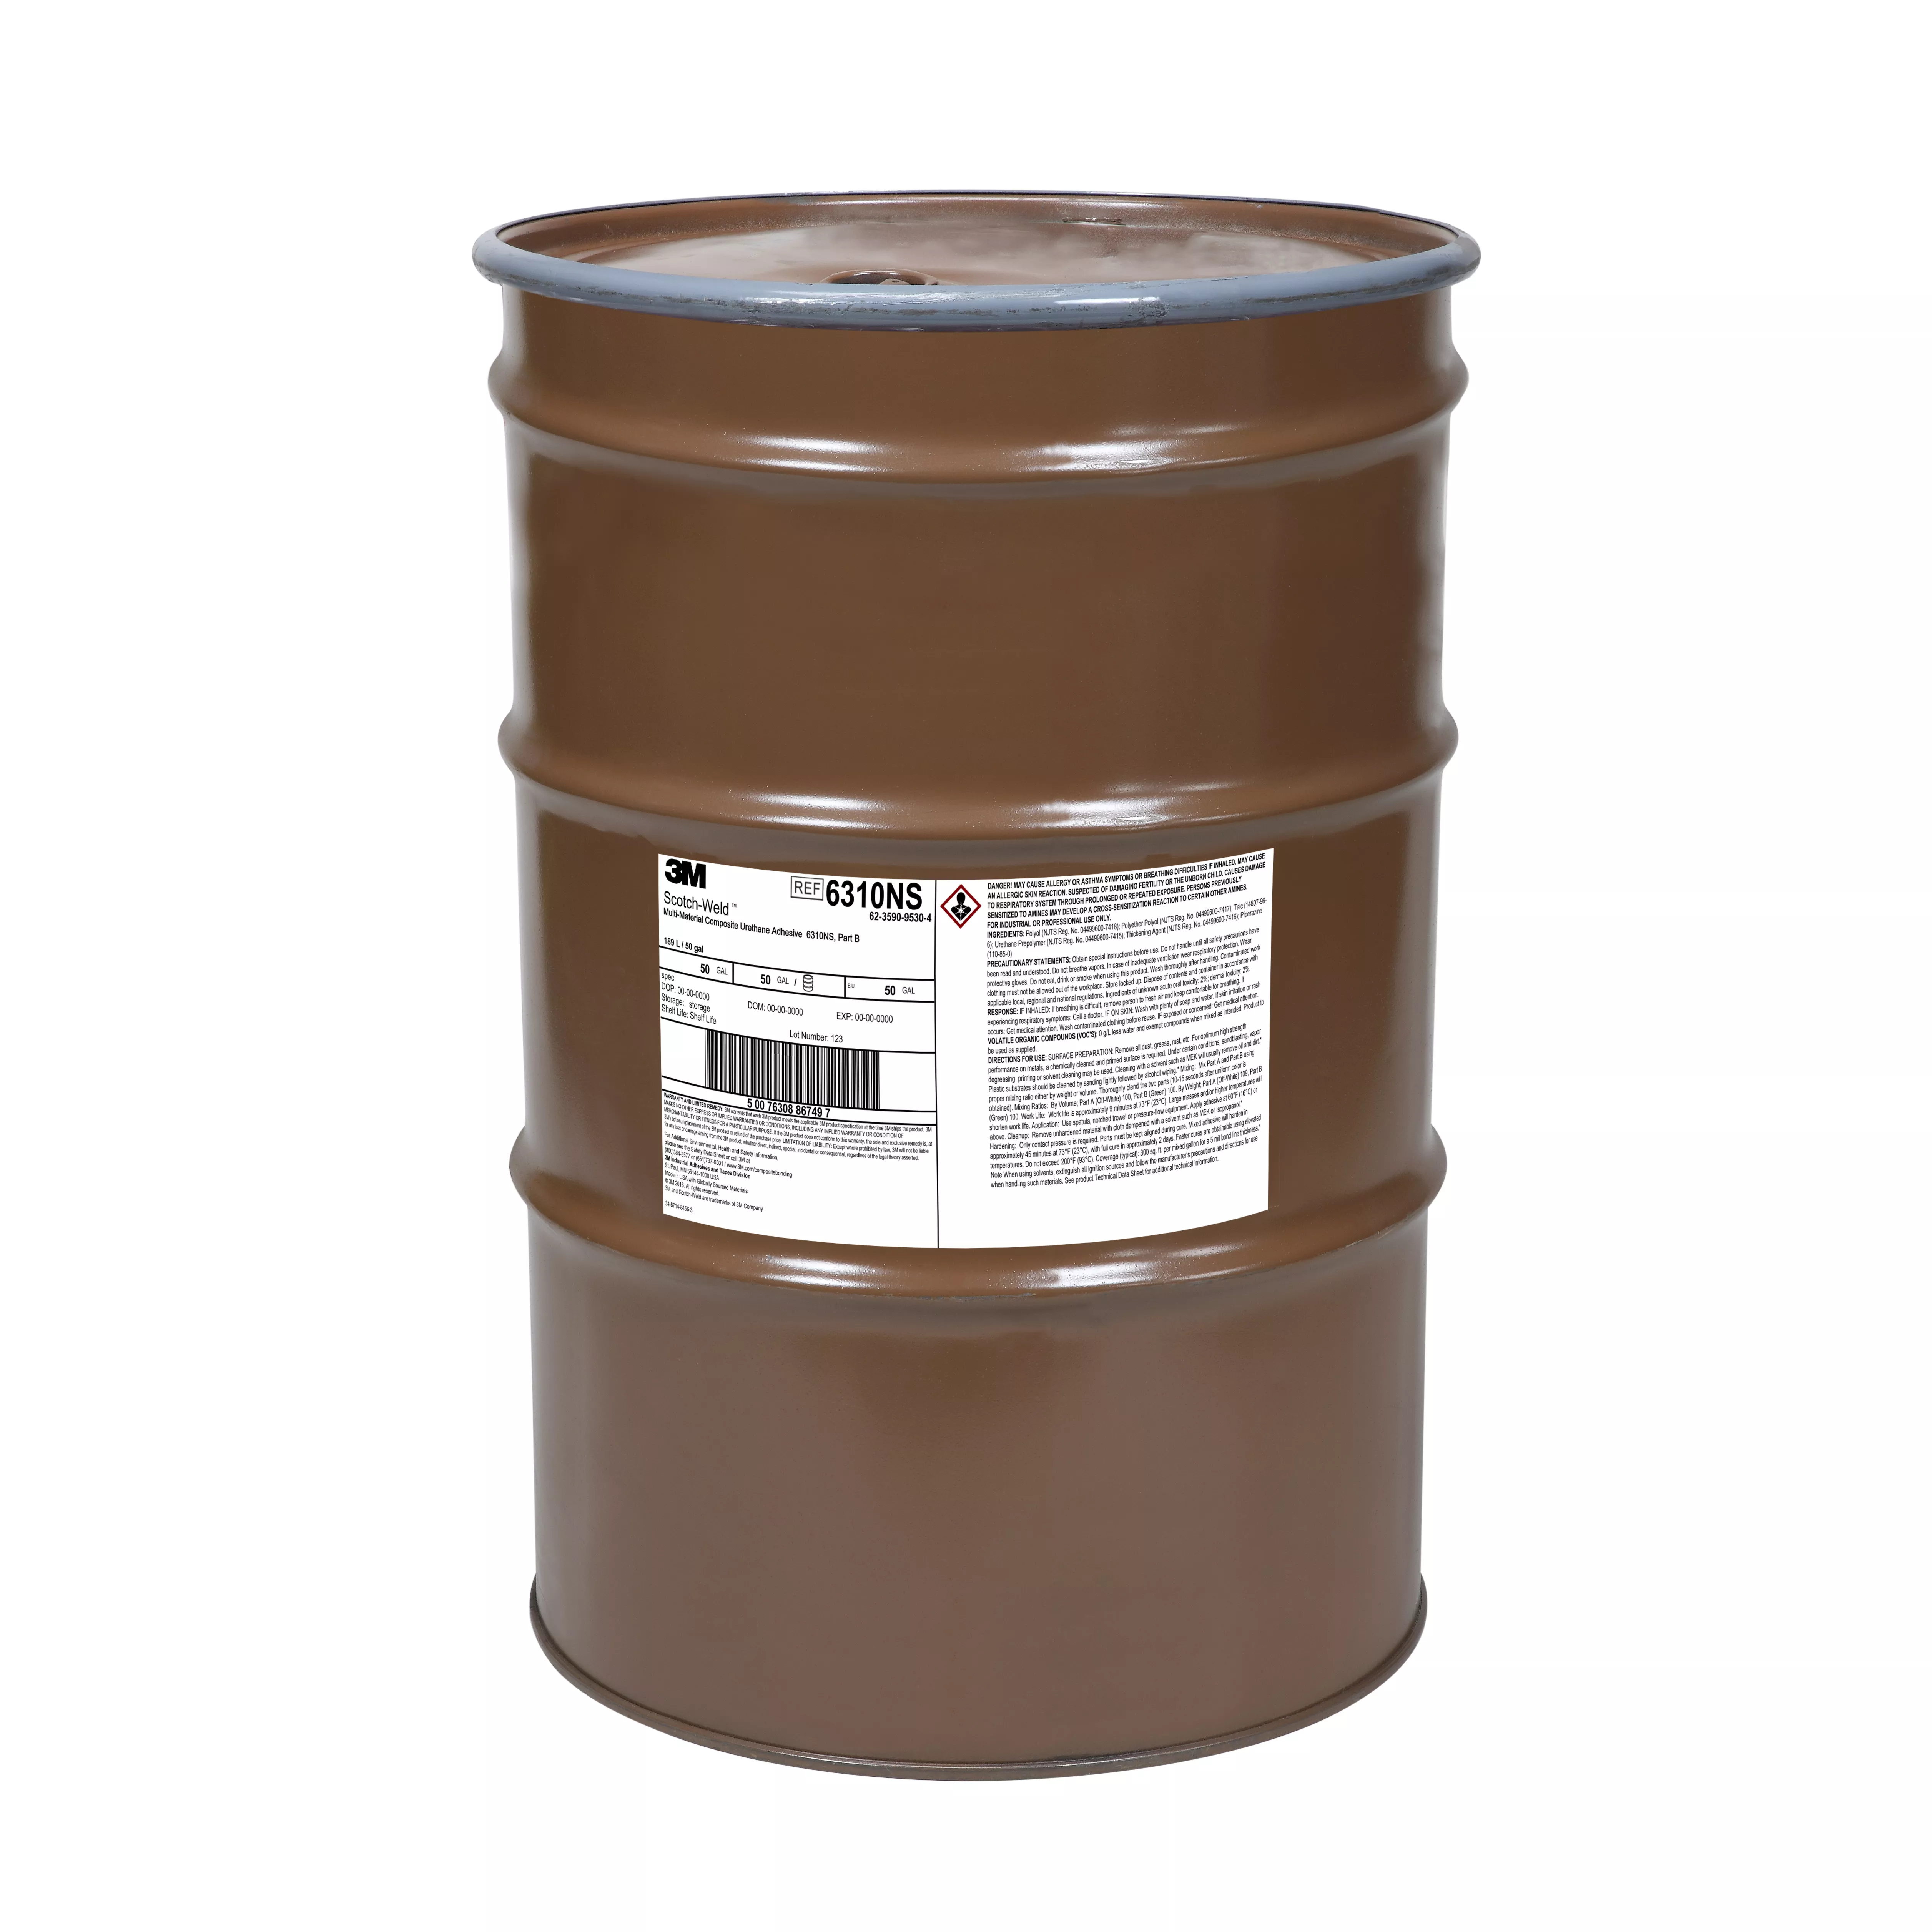 3M™ Scotch-Weld™ Multi-Material Composite Urethane Adhesive 6310NS,
Green, Part B, 55 Gallon (50 Gallon Net), Drum